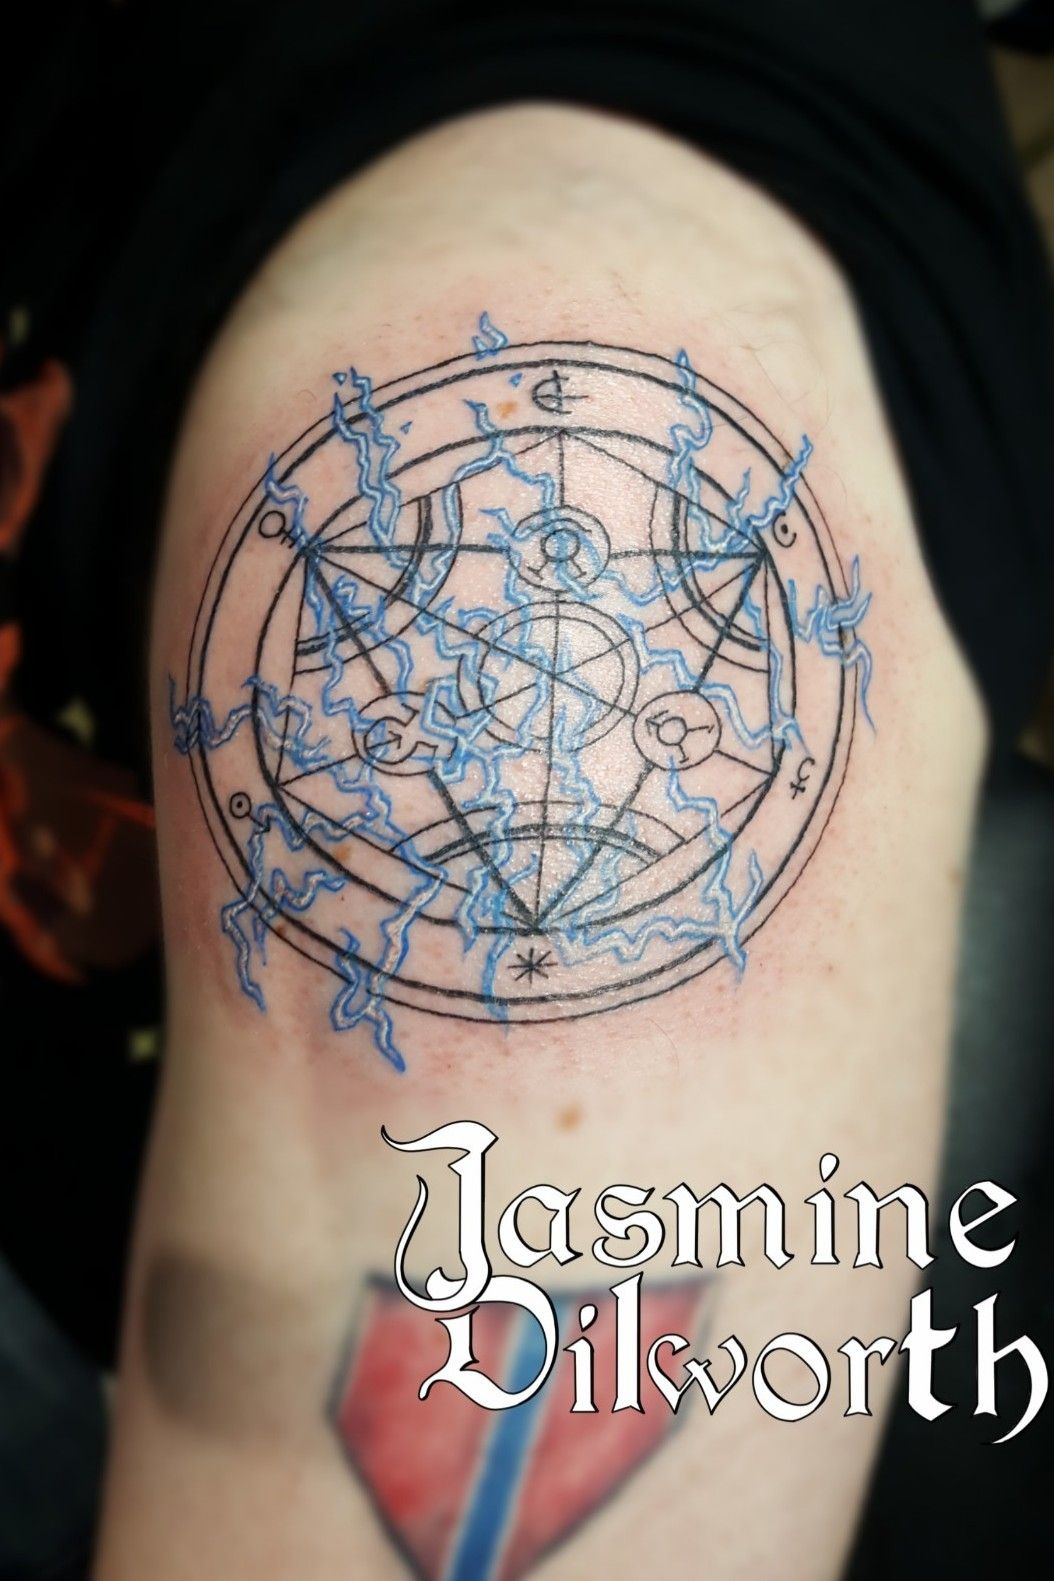 Just a friendly reminder x had a hand tattoo of a transmutation circle from  Fullmetal Alchemist  rXXXTENTACION